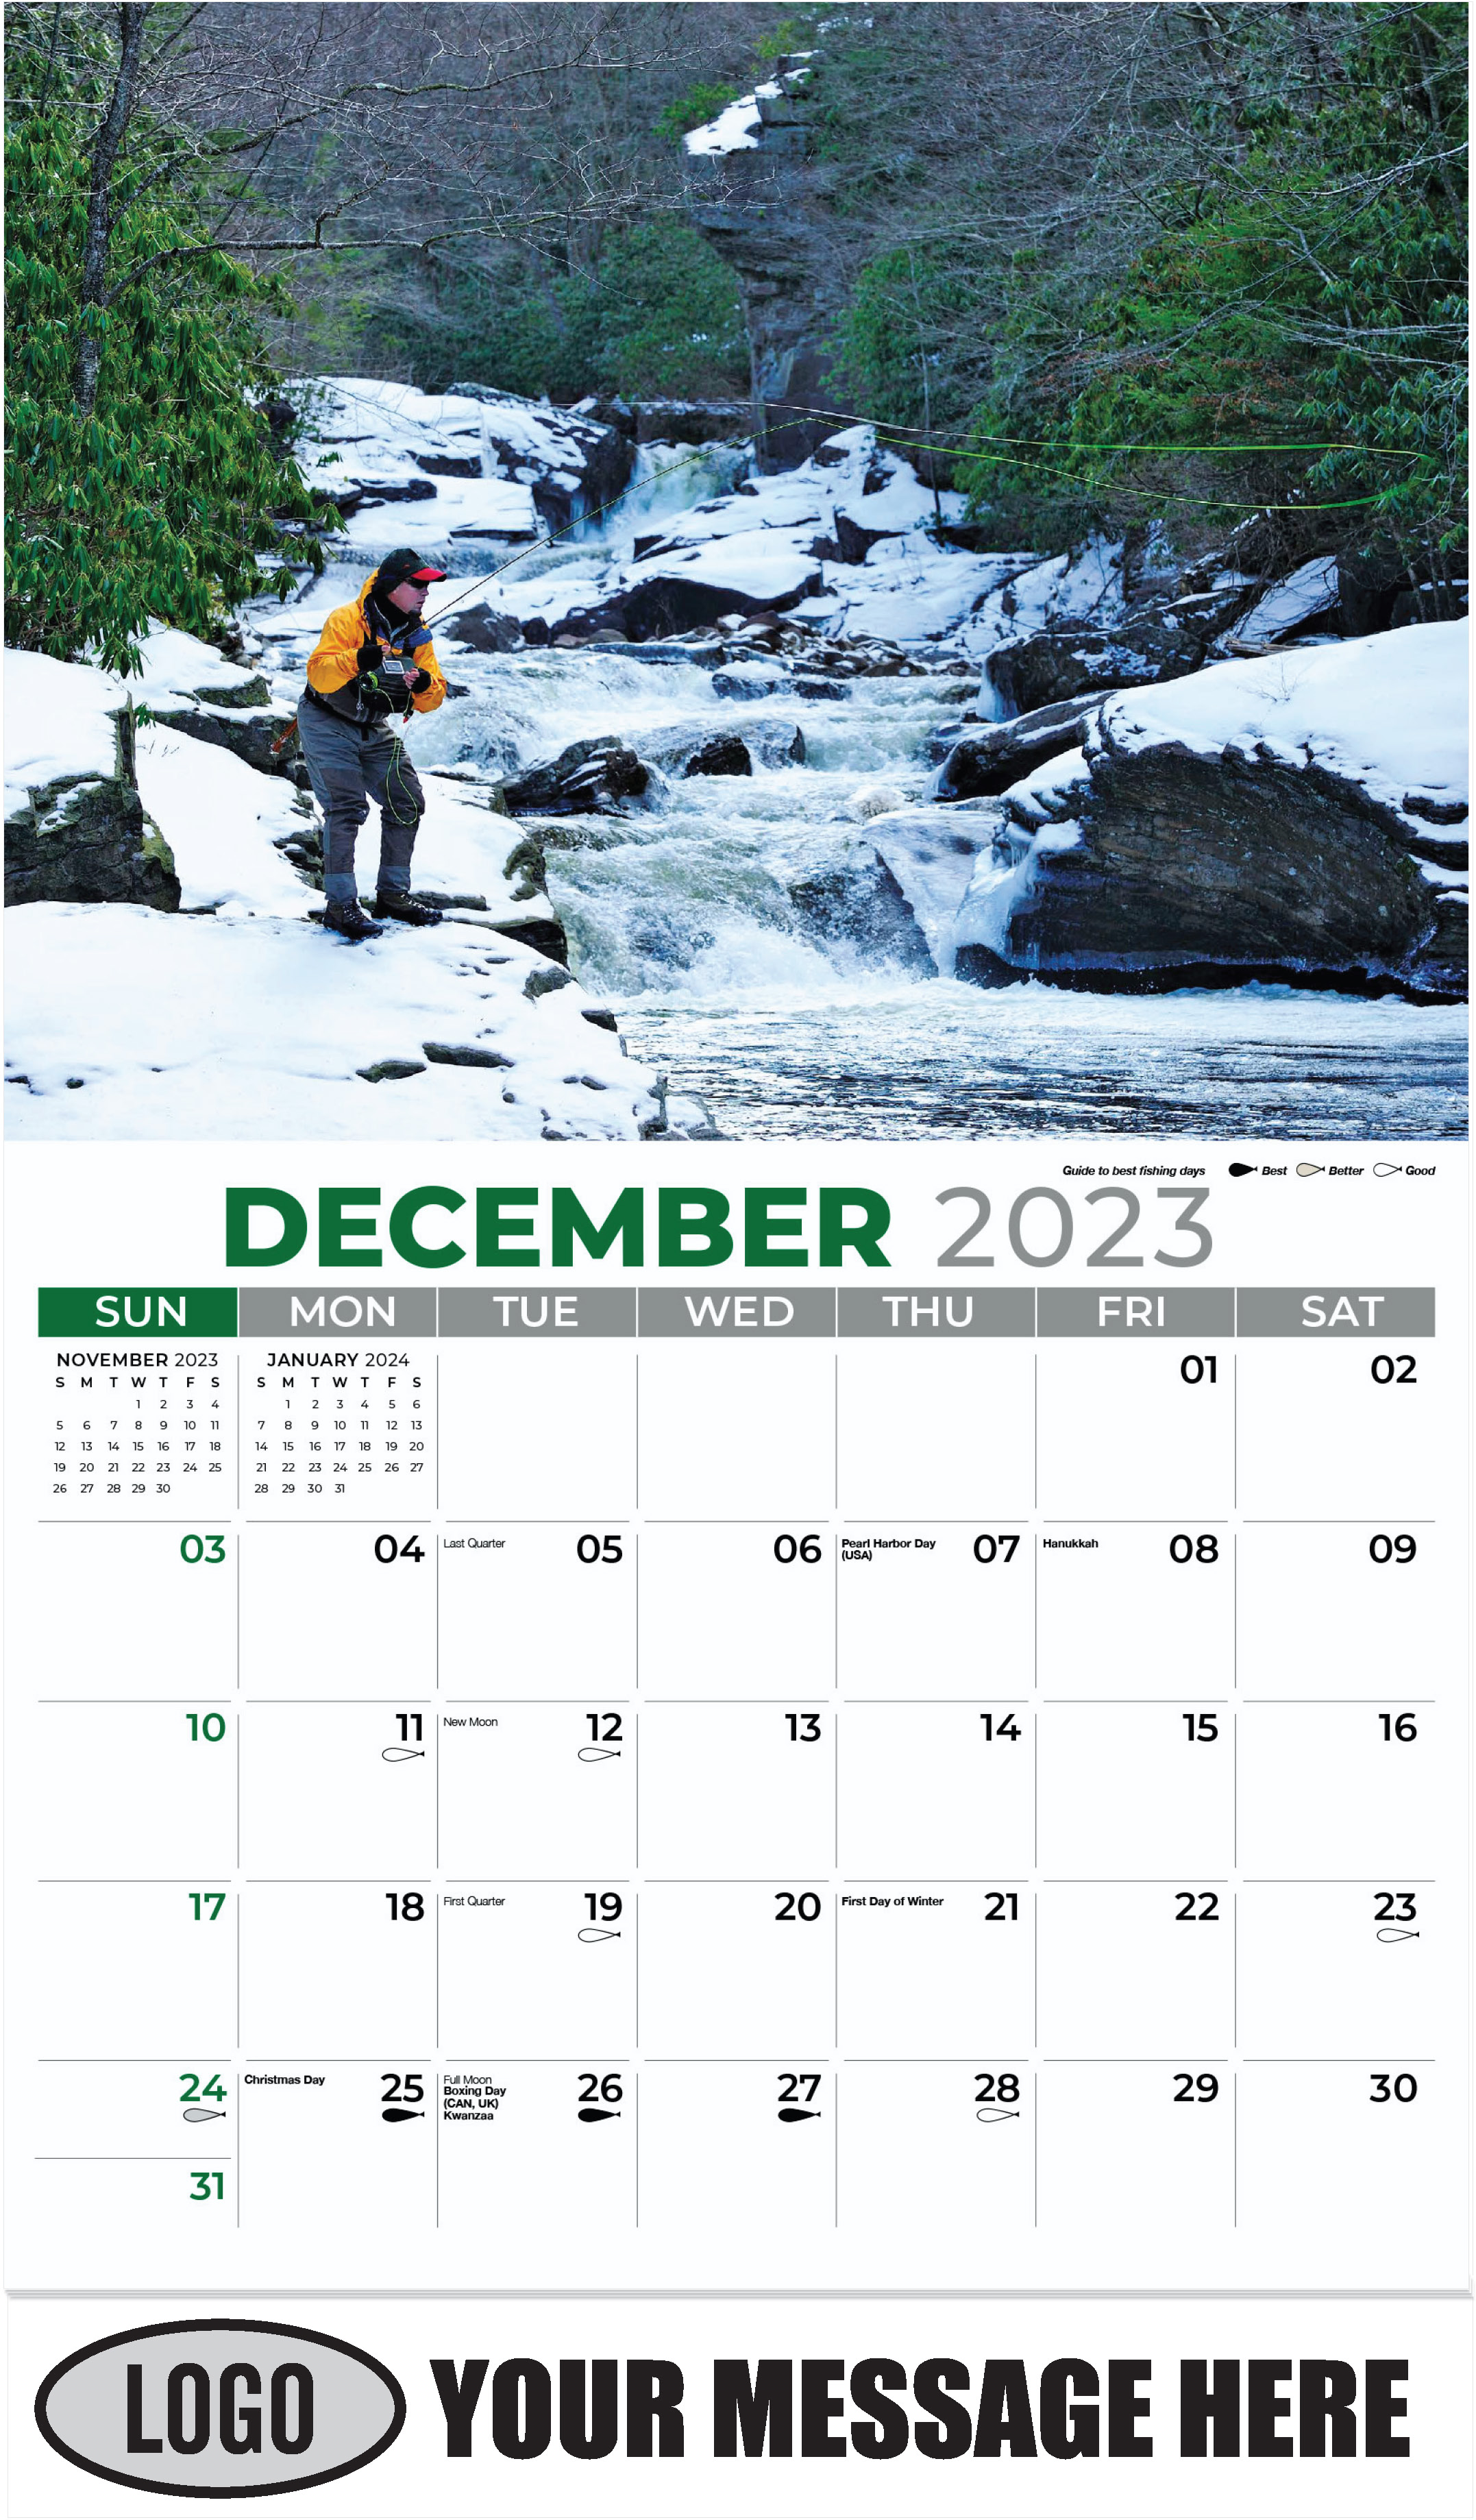 December 2023 - Fishing & Hunting 2023 Promotional Calendar